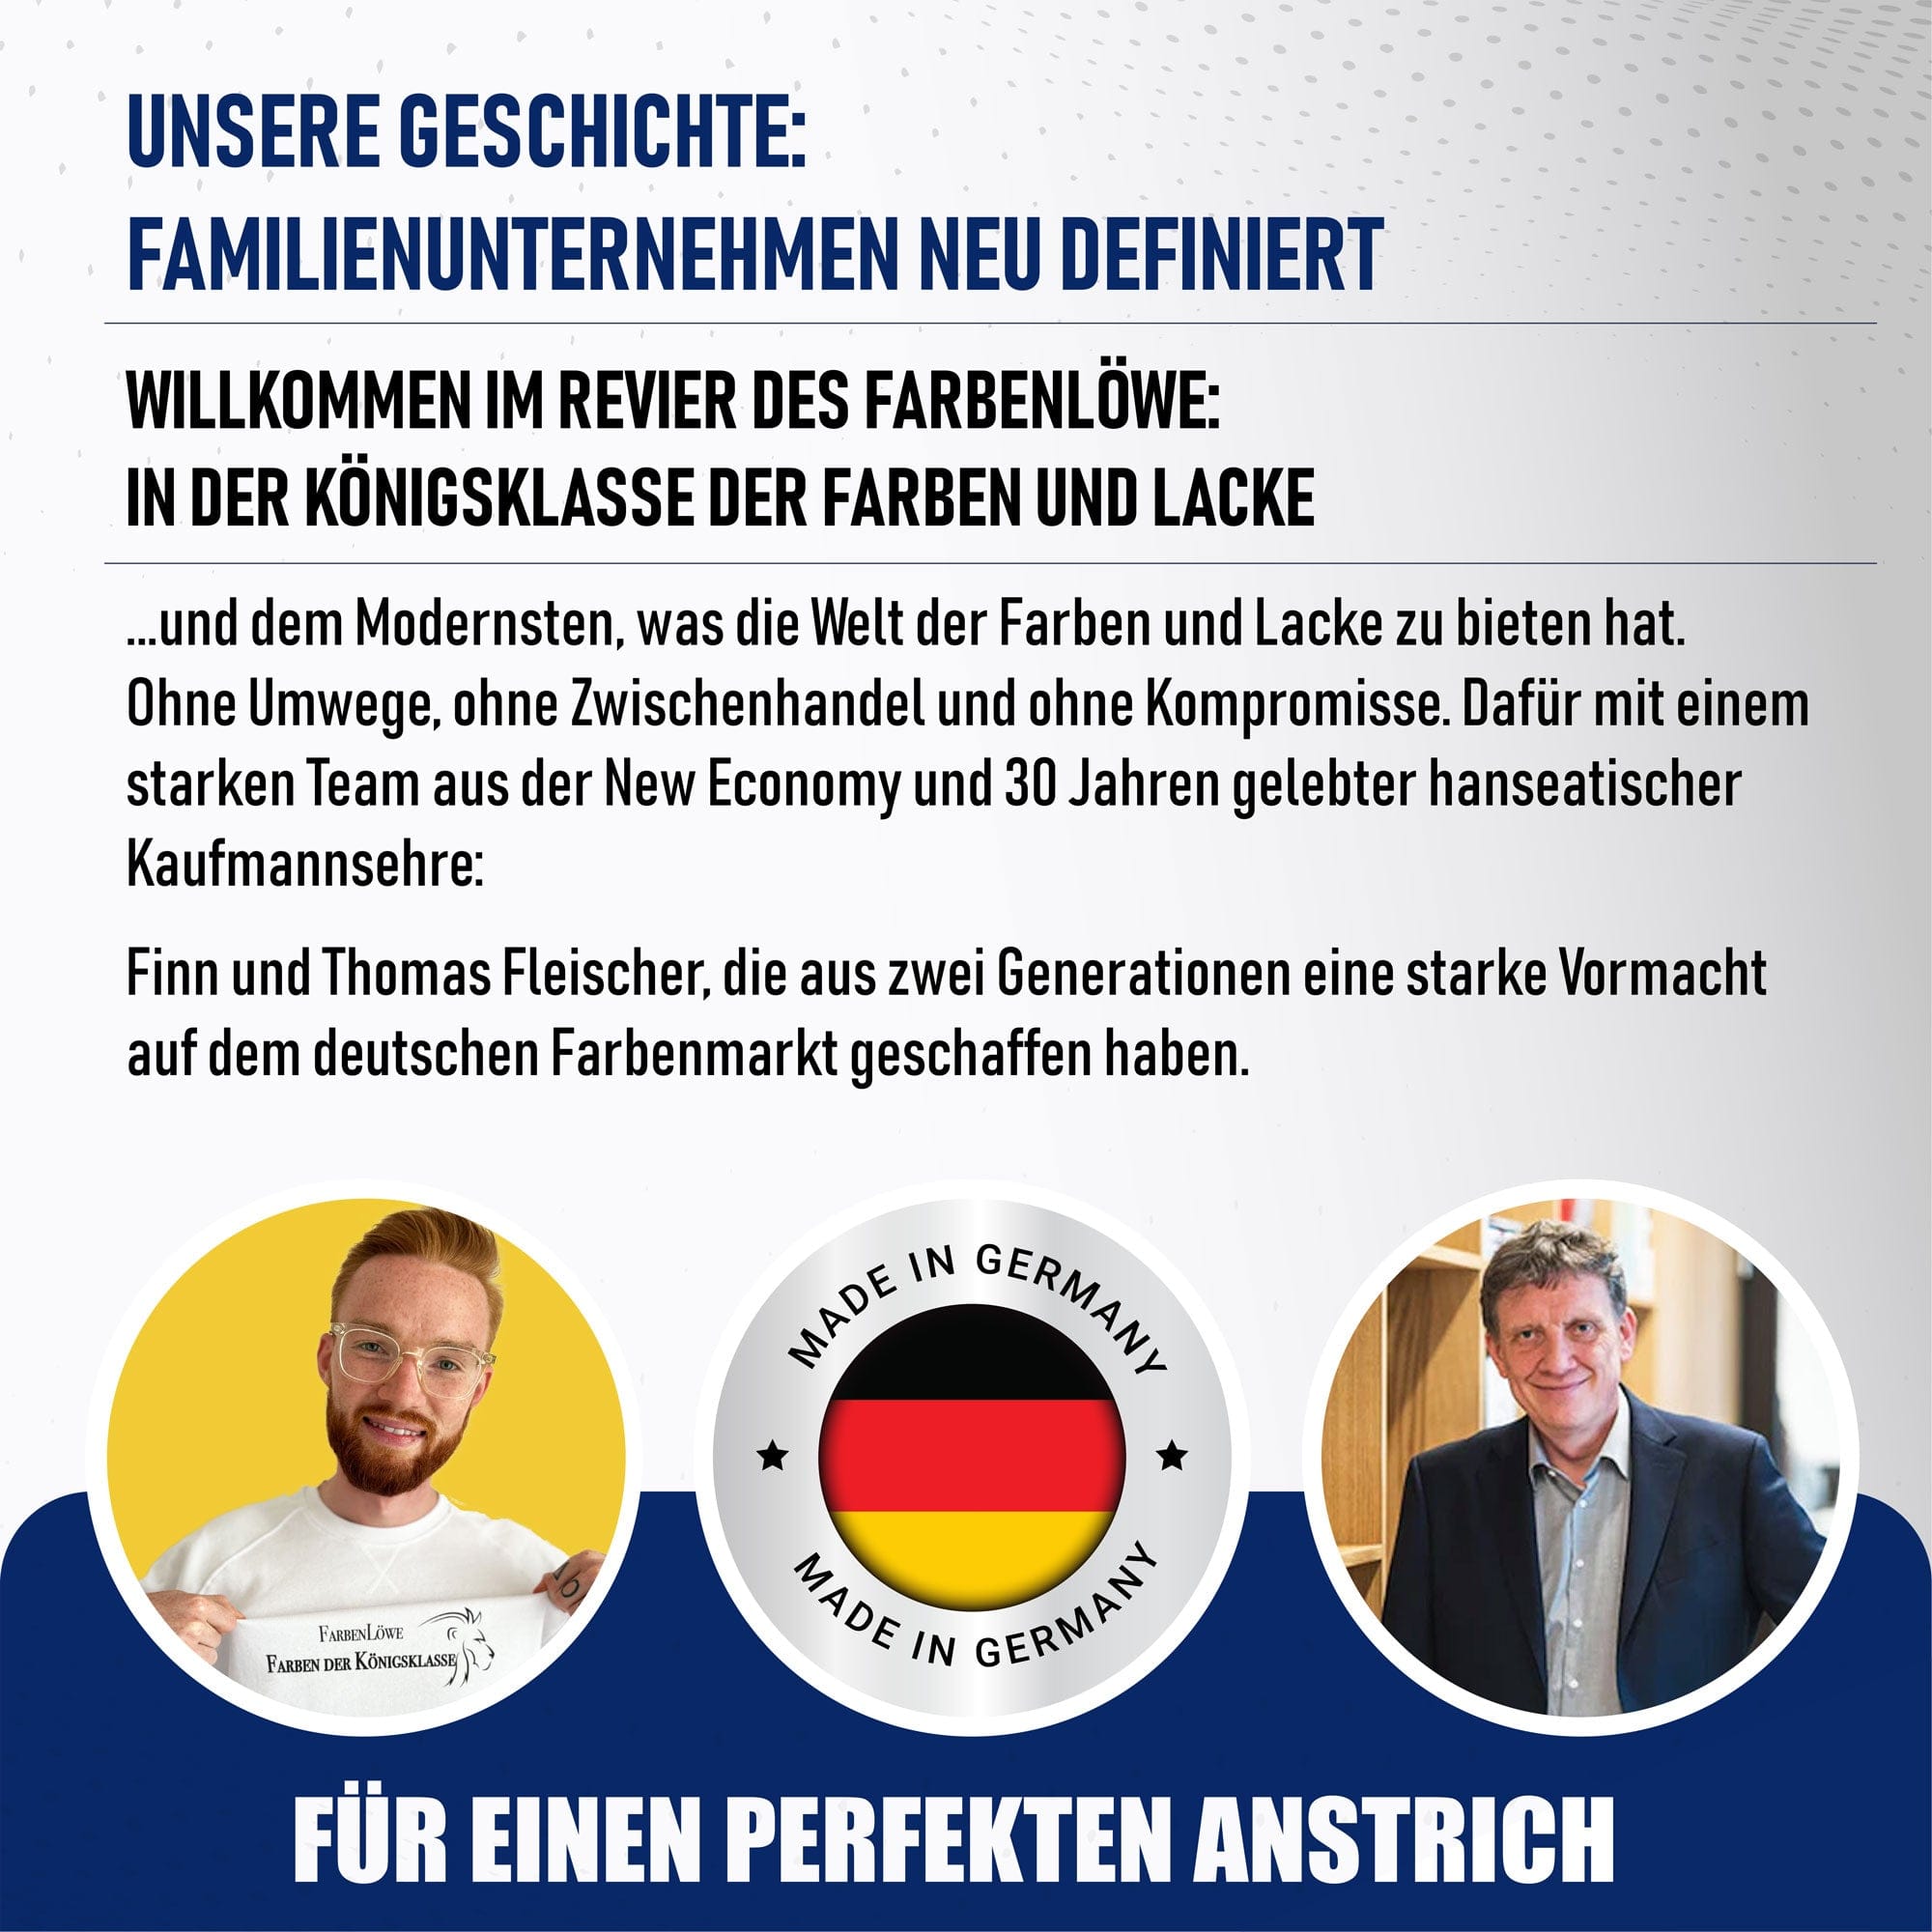 Hamburger Lack-Profi Lacke & Beschichtungen Hamburger Lack-Profi 2K Autolack in Safrangelb RAL 1017 mit Lackierset (X300) & Verdünnung (1 L) - 30% Sparangebot